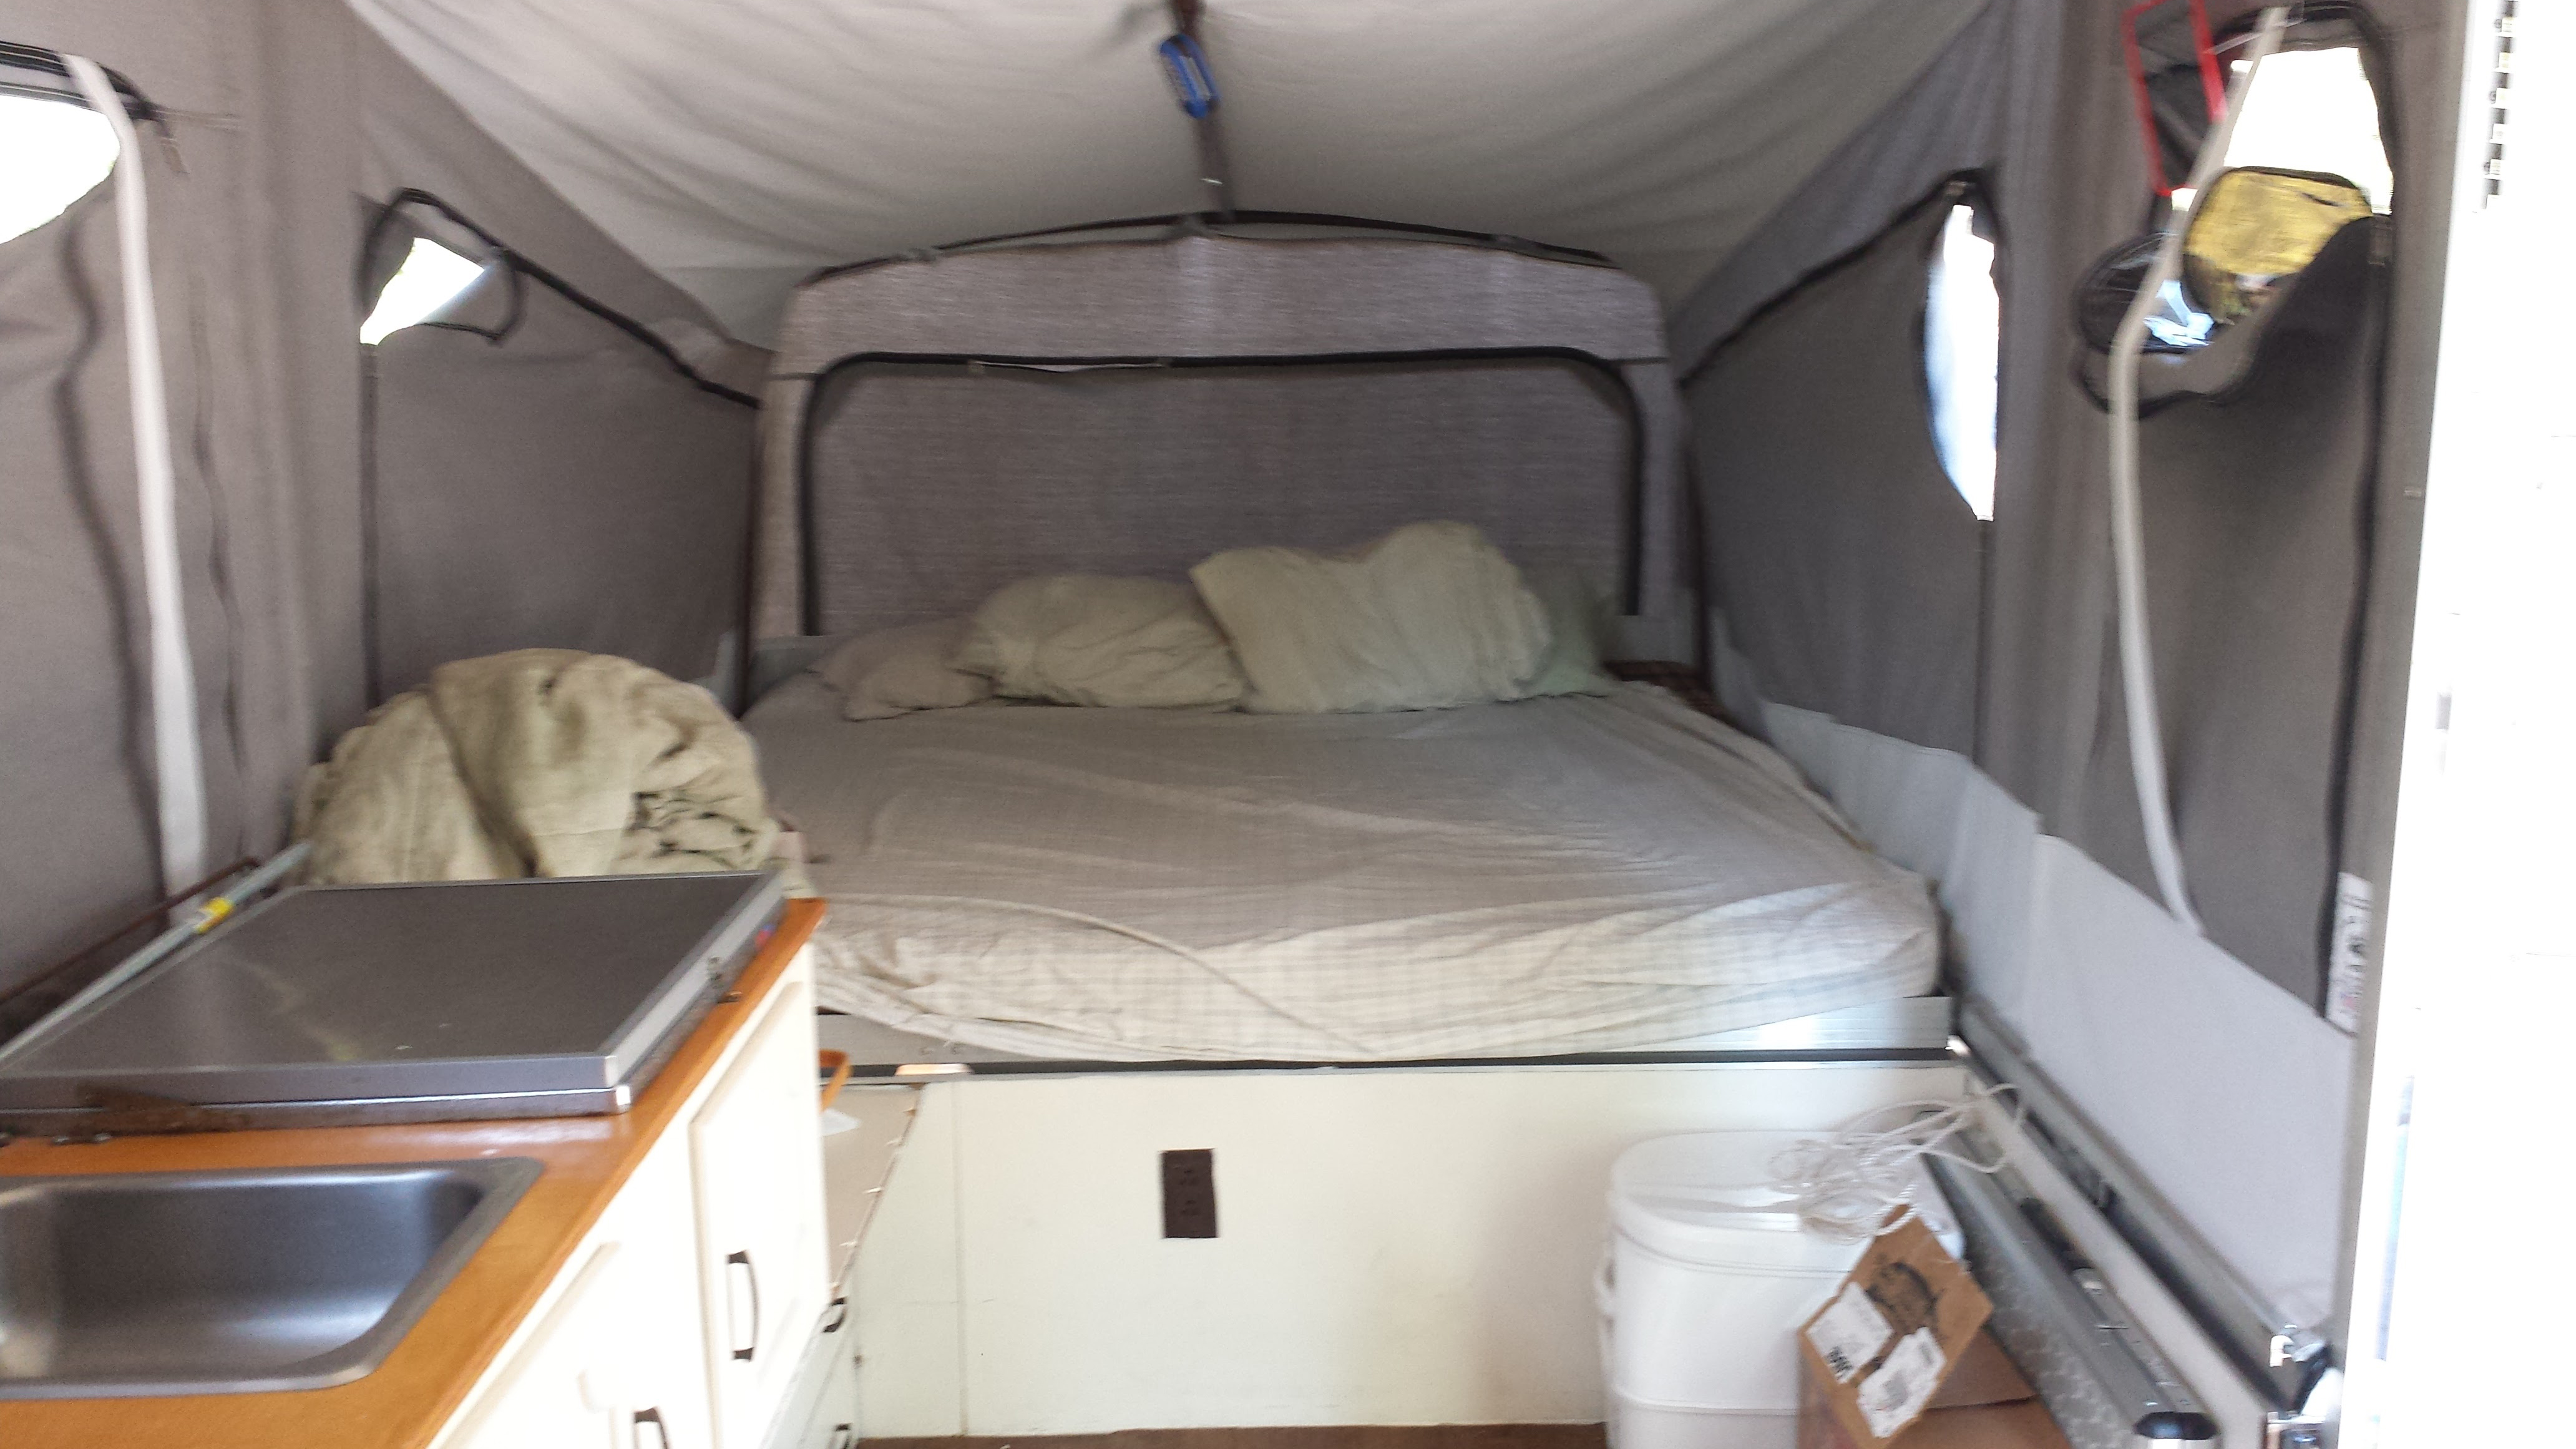 Interior of tent pop-up camper